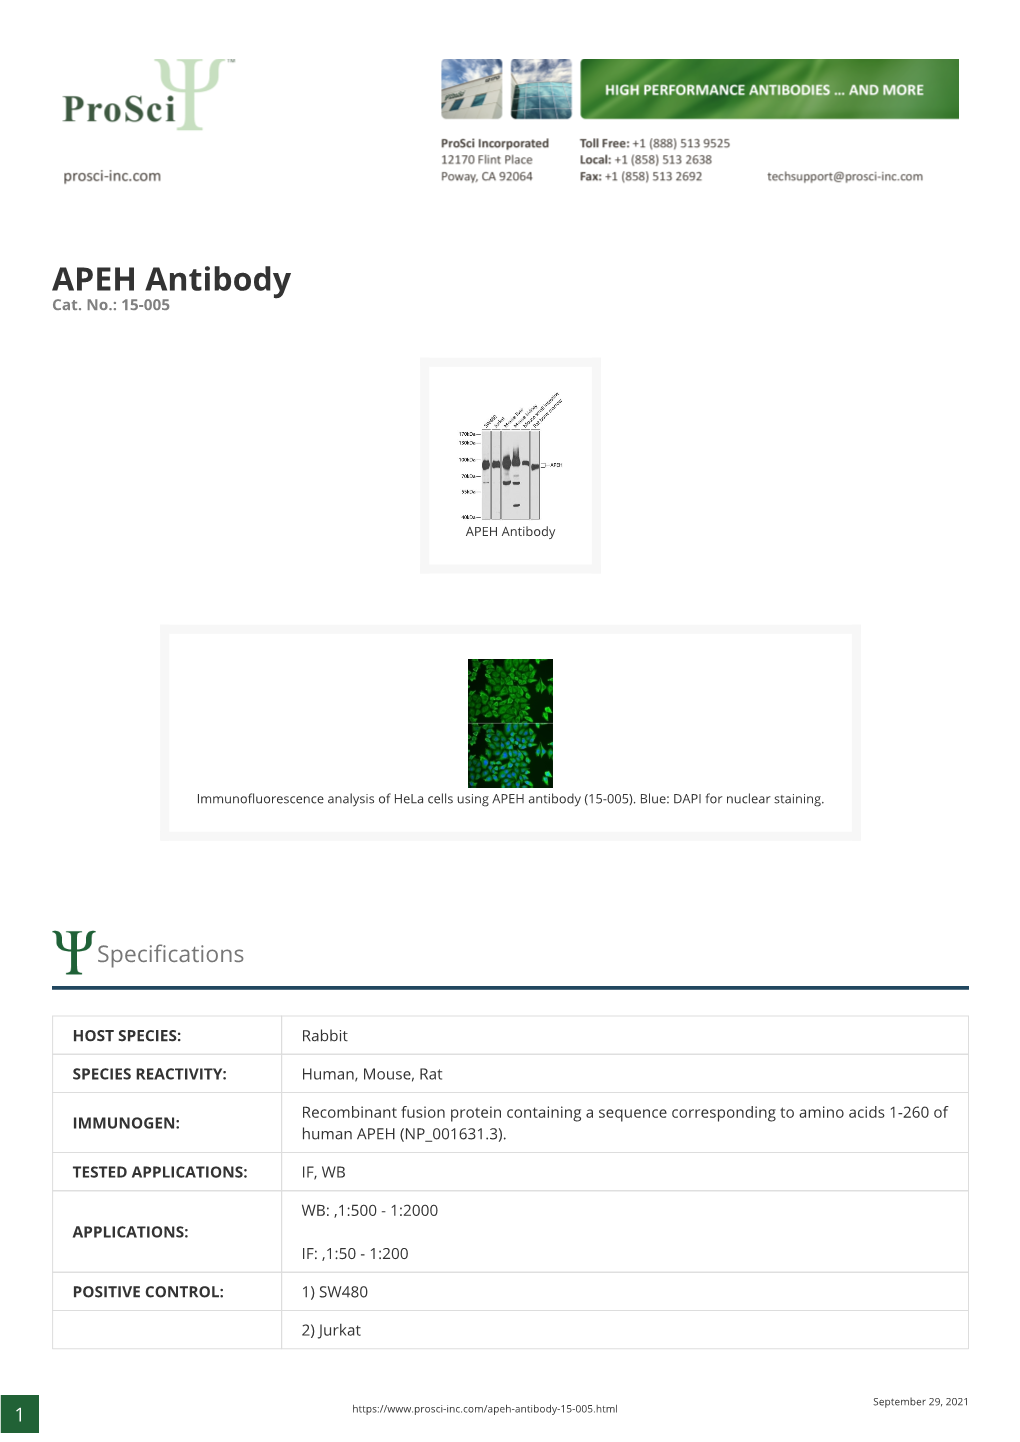 APEH Antibody Cat